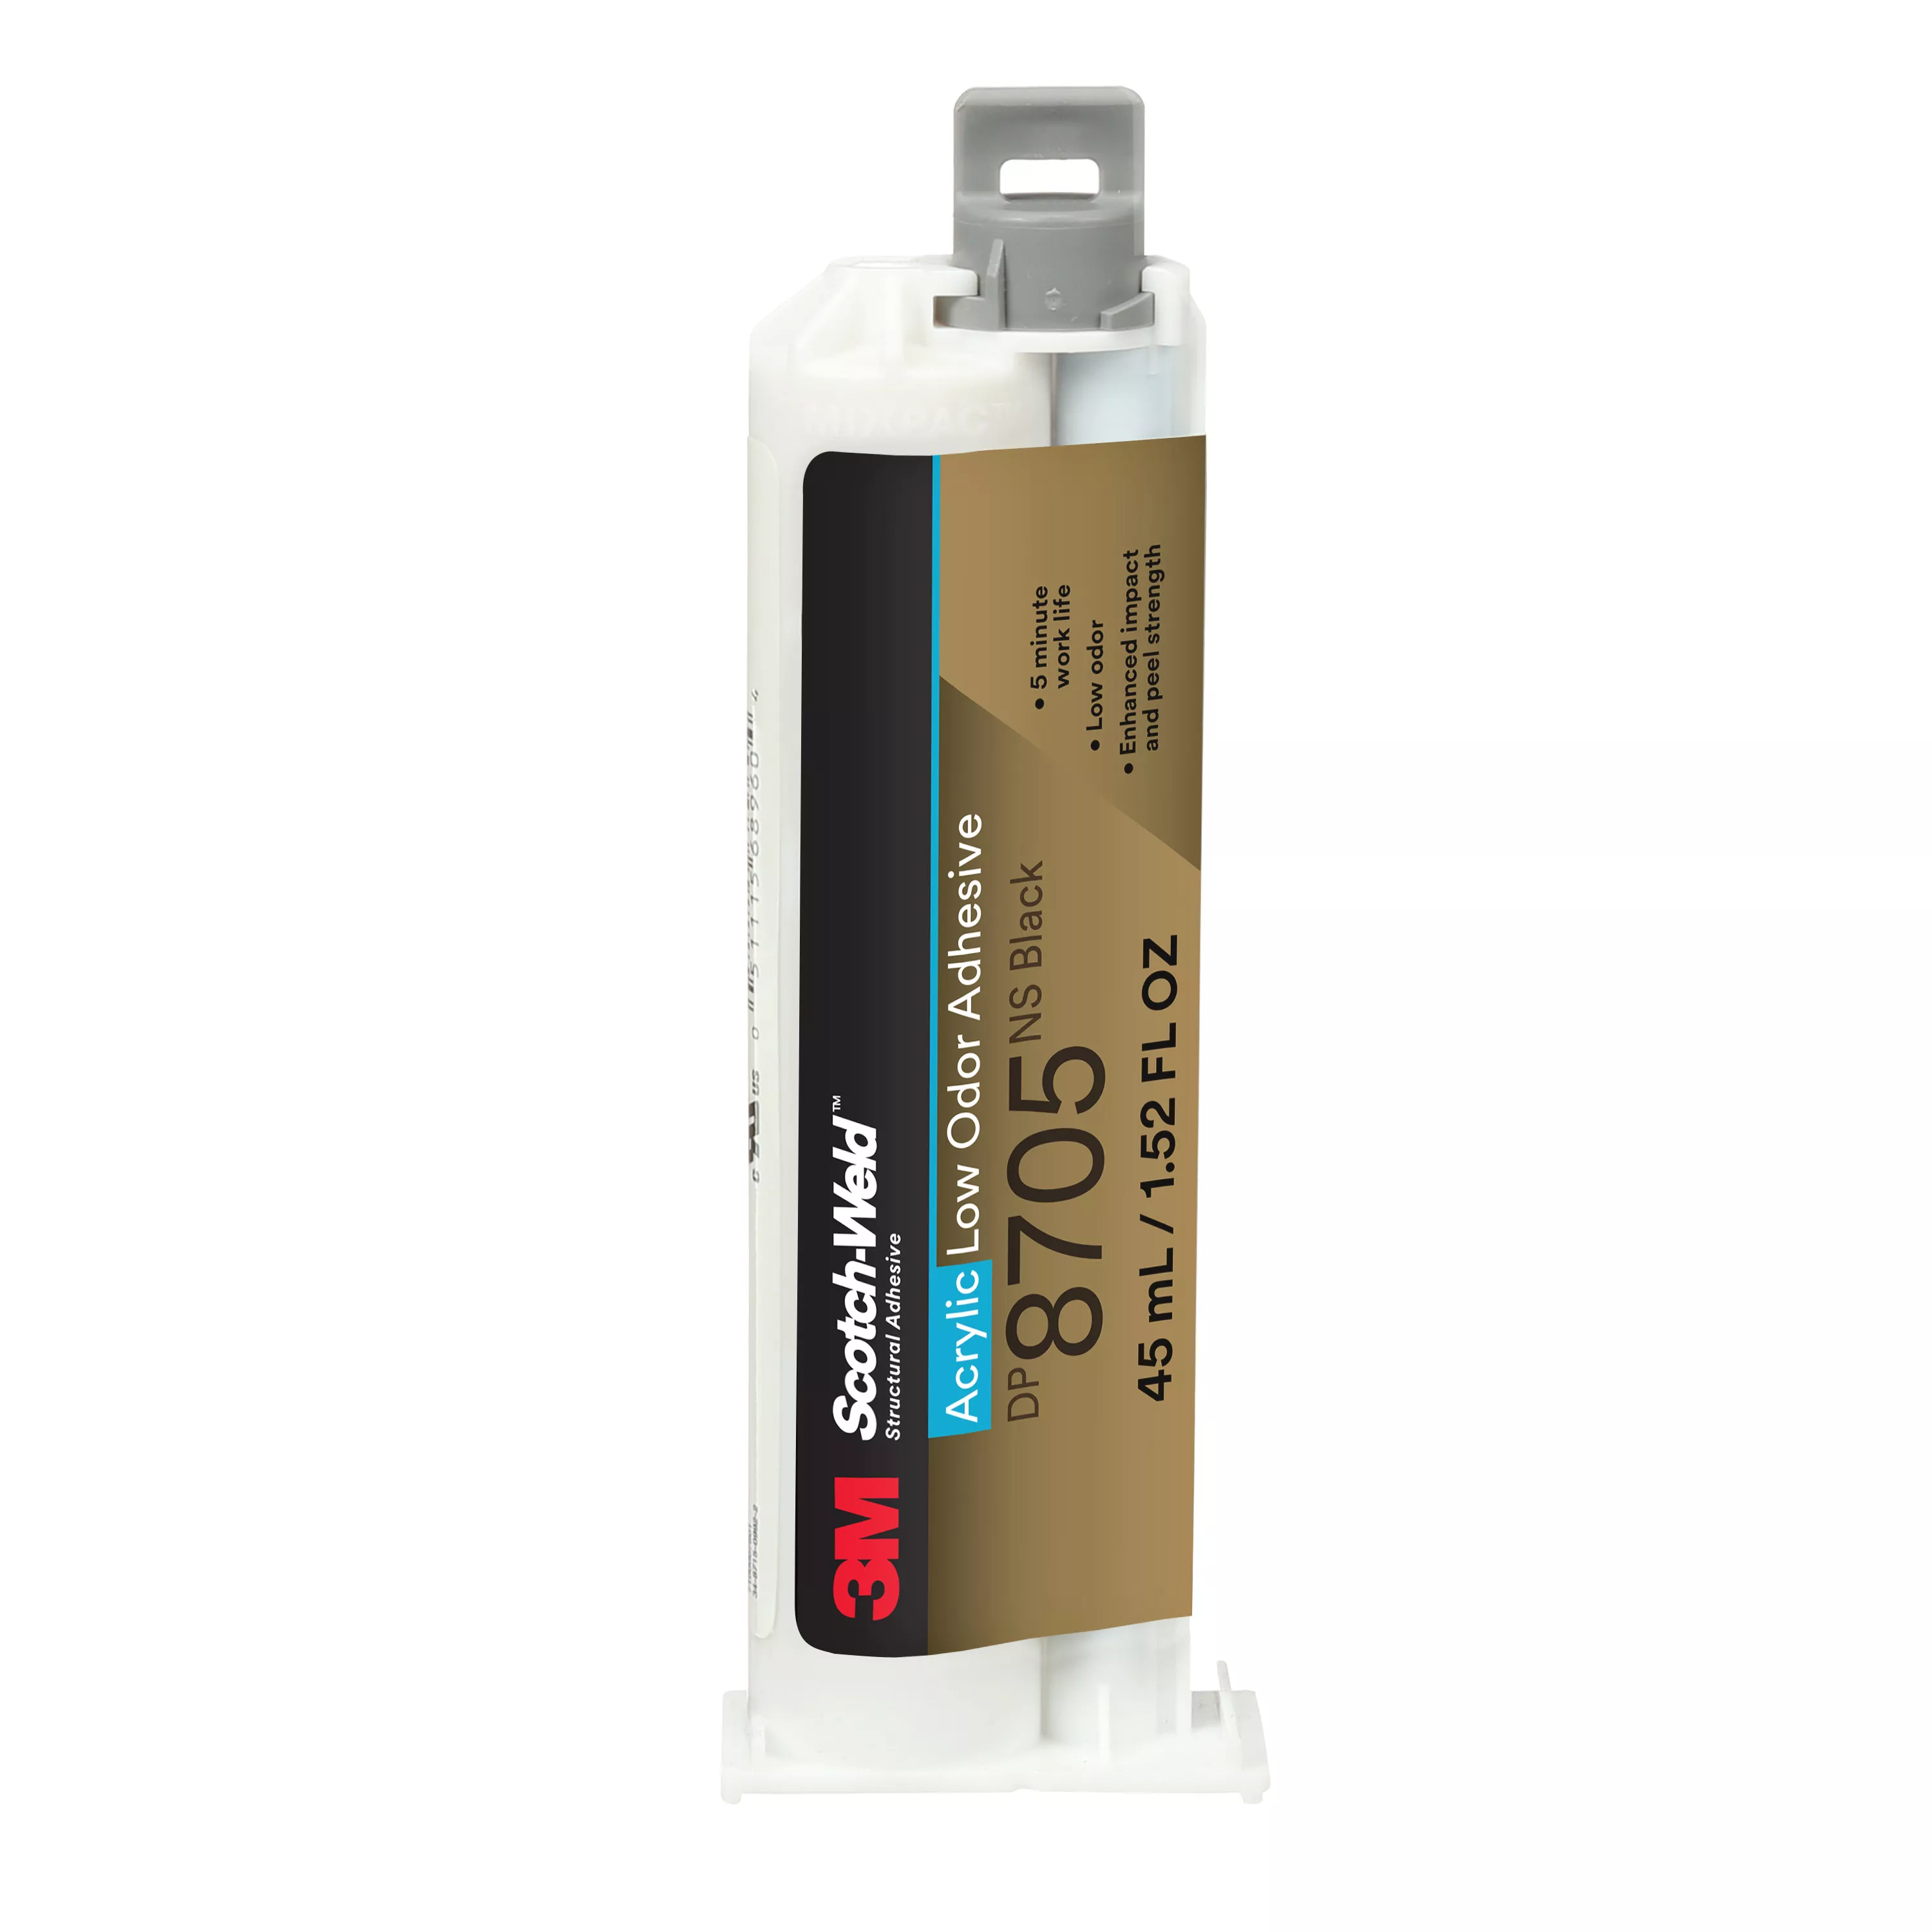 3M™ Scotch-Weld™ Low Odor Acrylic Adhesive DP8705NS, Black, 45 mL
Duo-Pak, 12 Each/Case